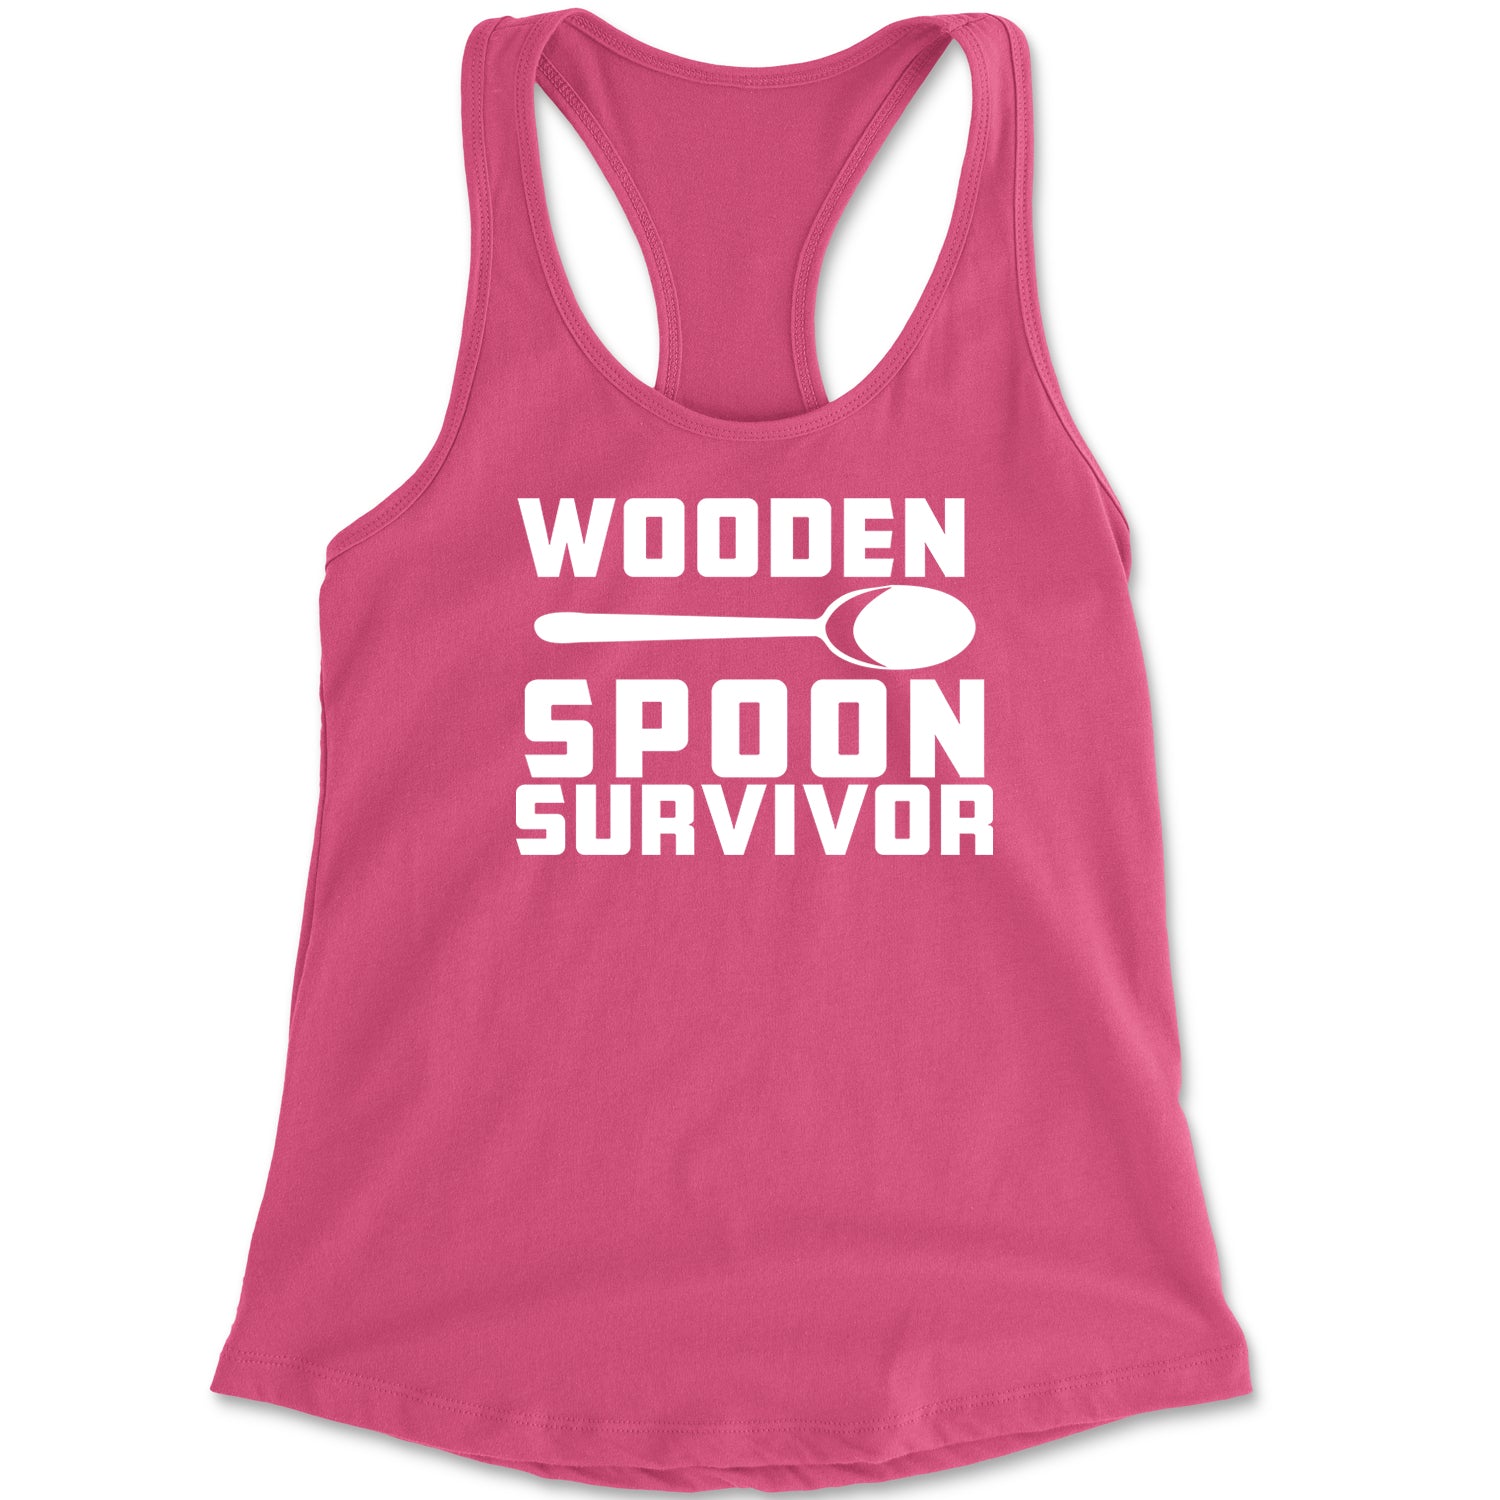 Wooden Spoon Survivor Racerback Tank Top for Women funny, shirt, spoon, survivor, wooden by Expression Tees